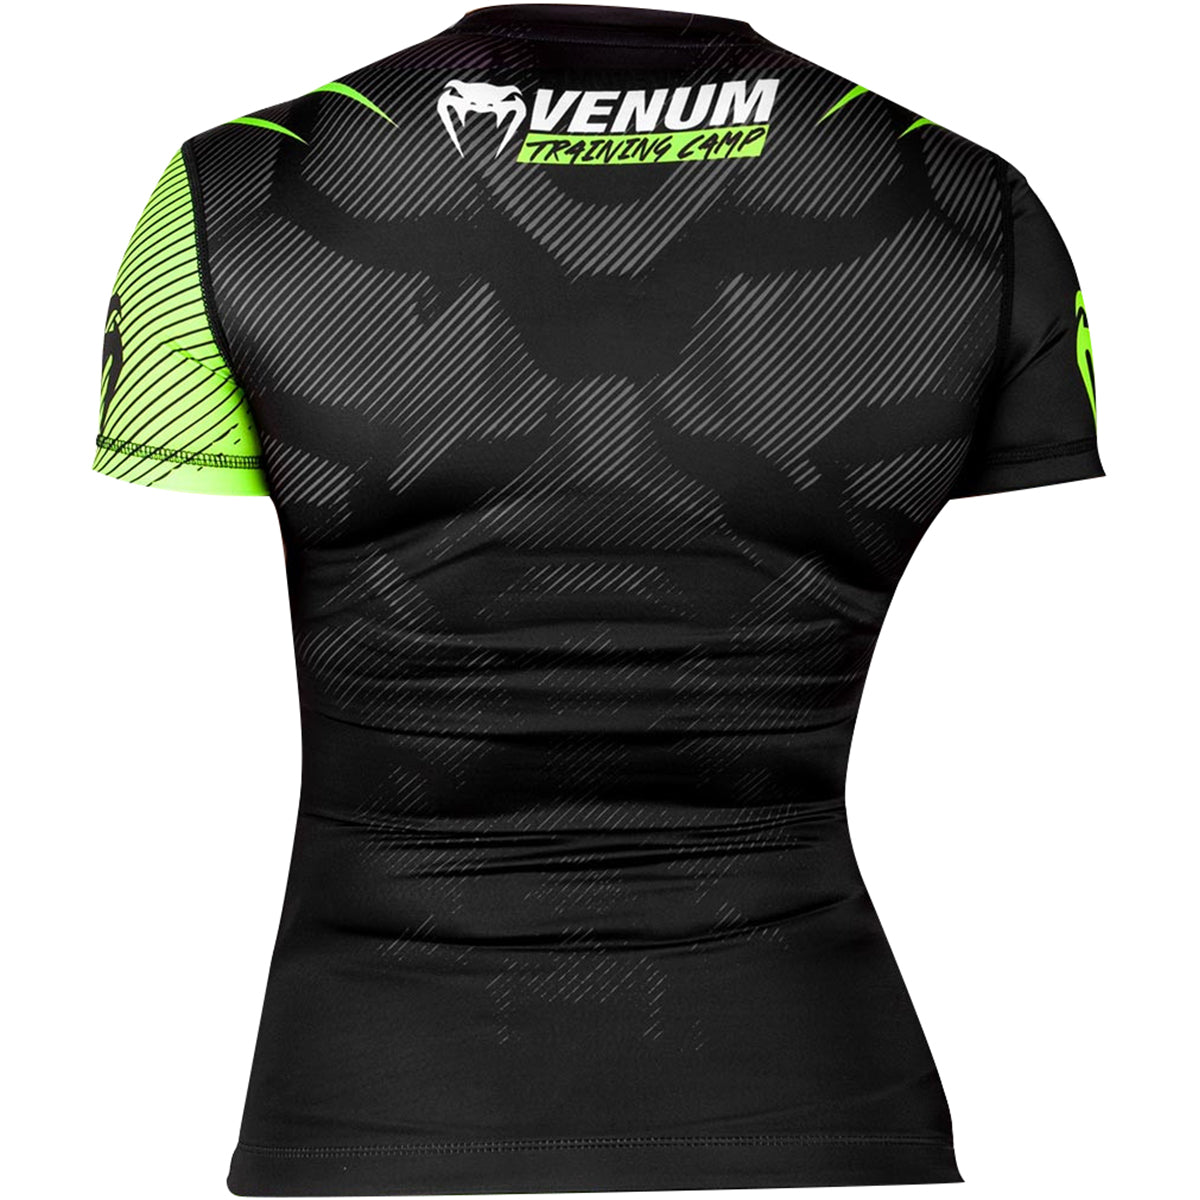 Venum Women's Training Camp 2.0 Short Sleeve Rashguard - Black/Neon Yellow Venum